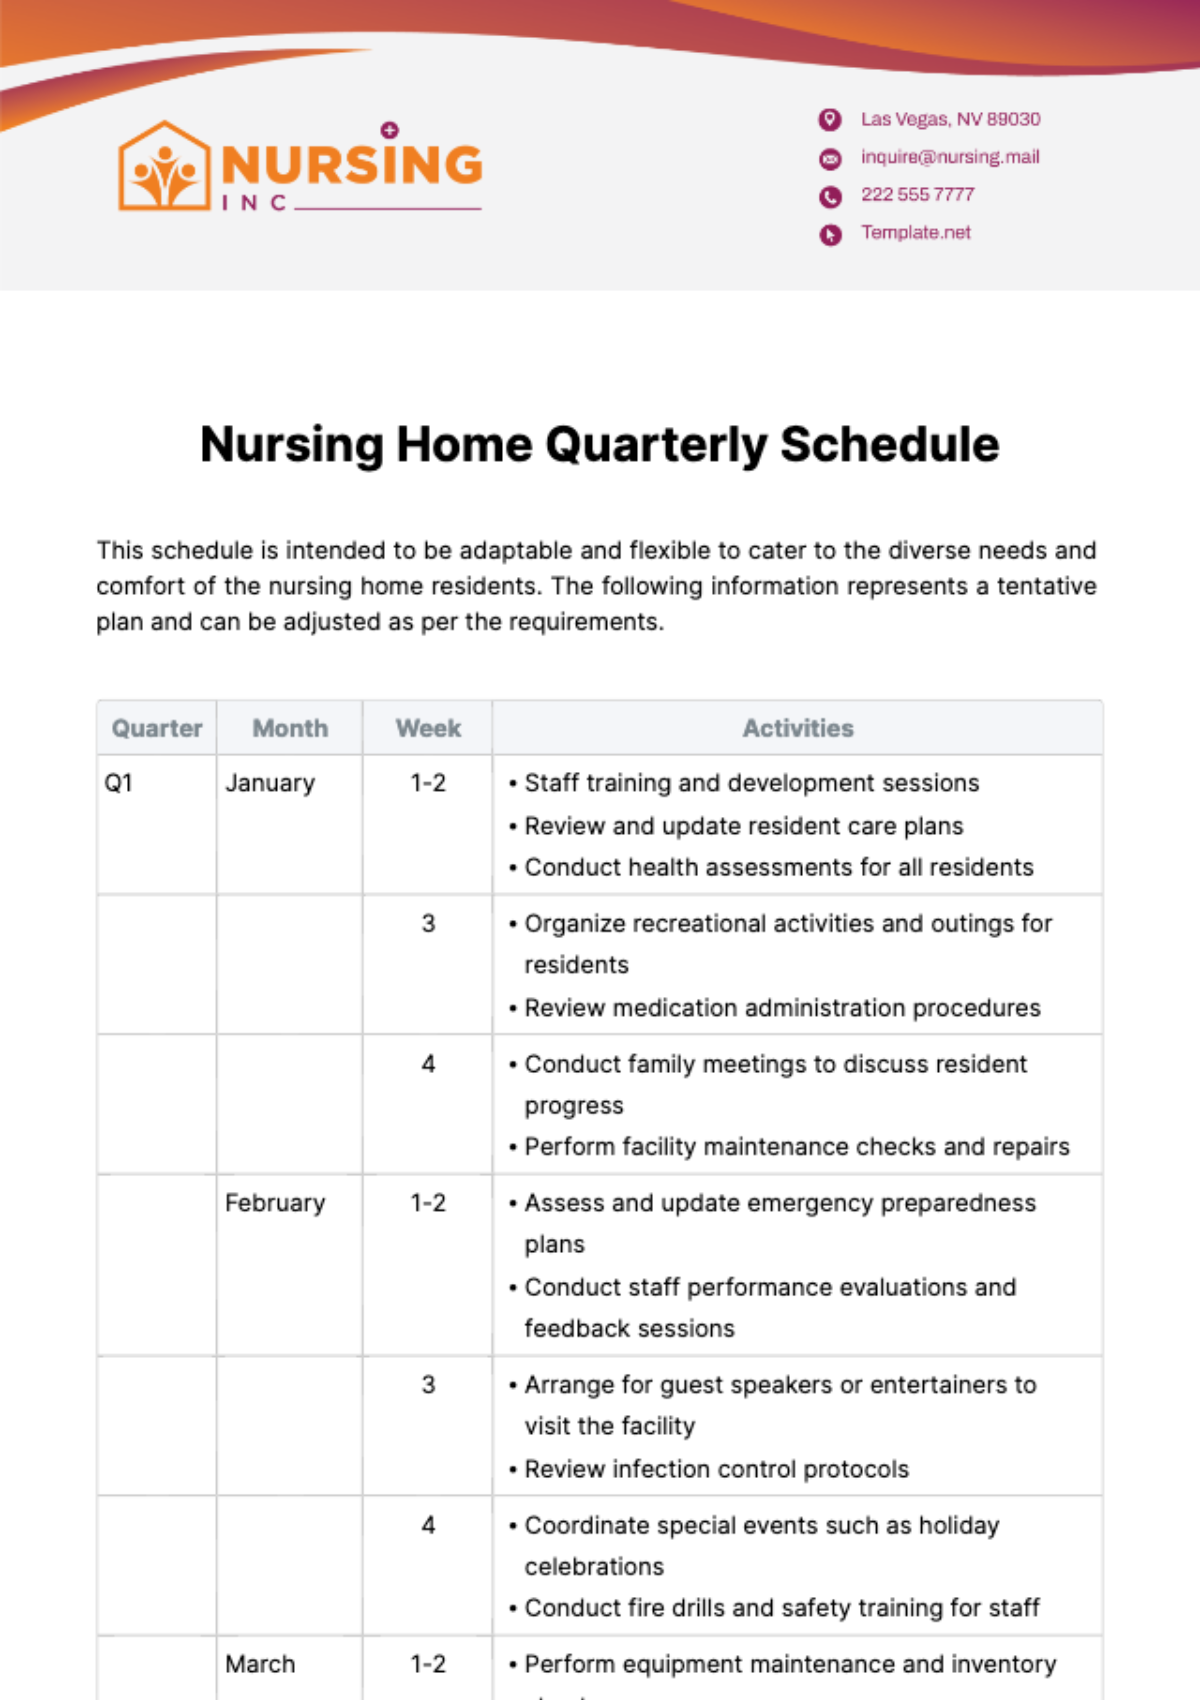 Nursing Home Quarterly Schedule Template